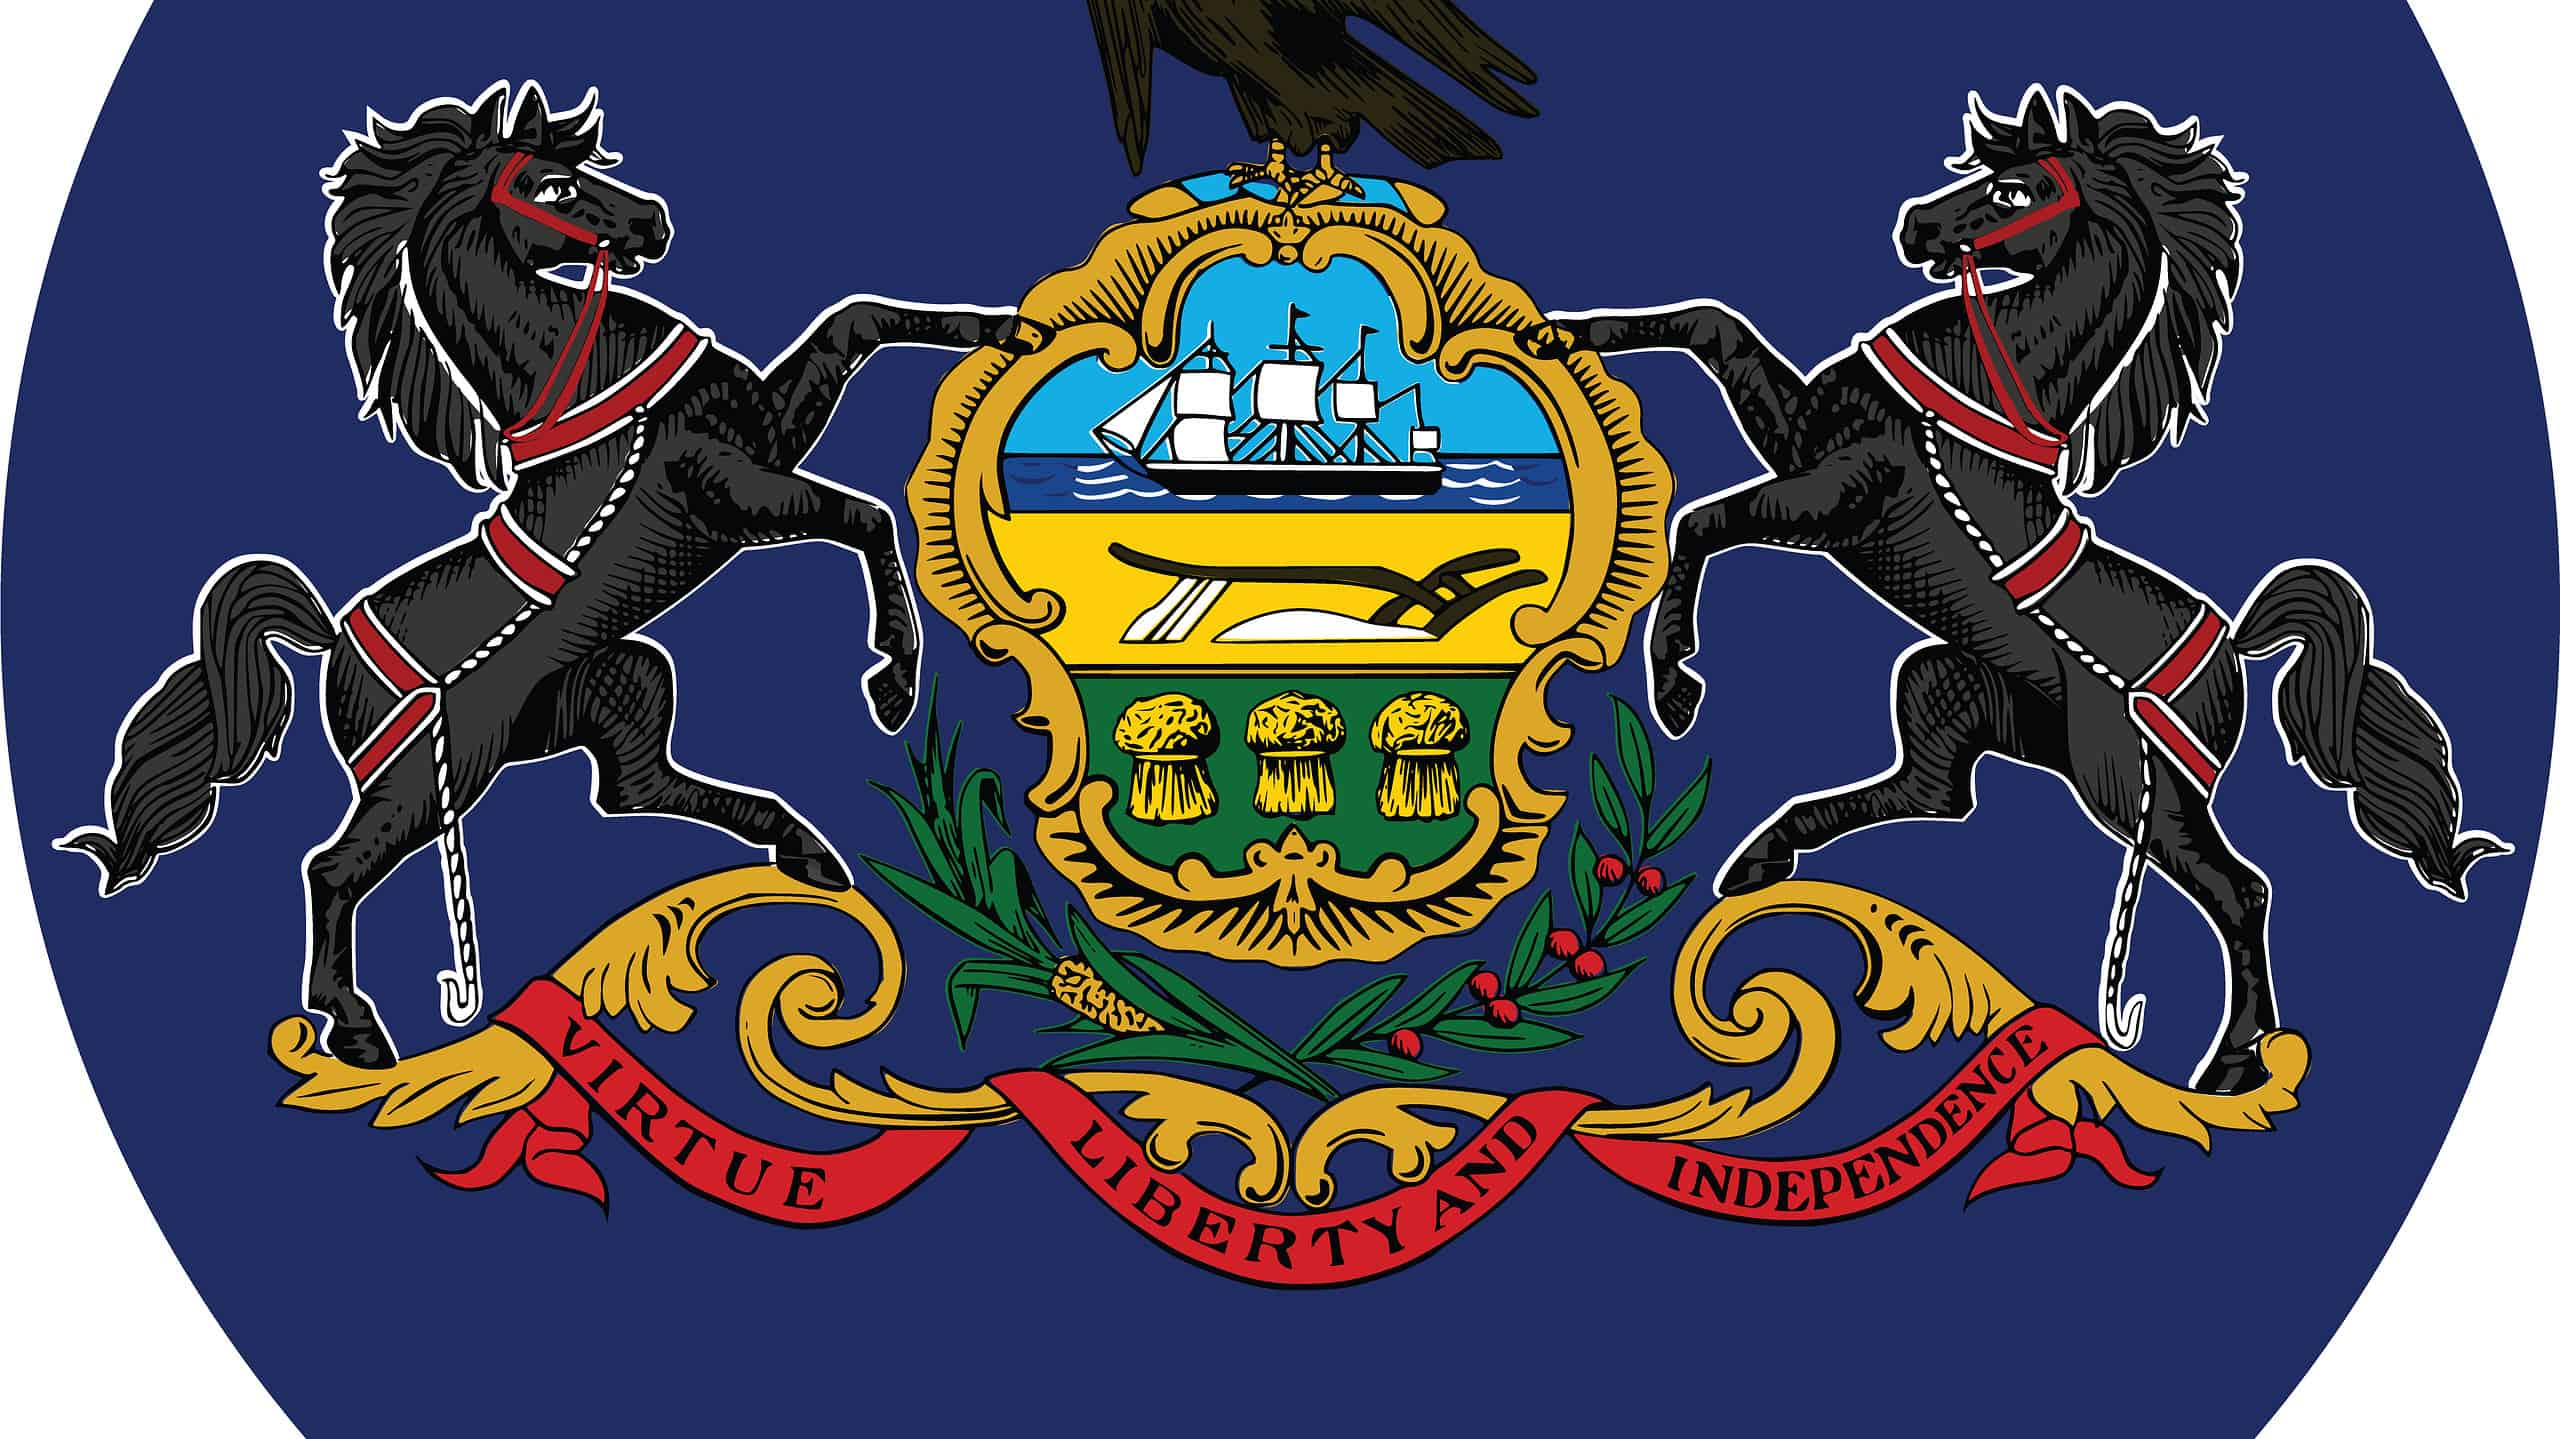 Pennsylvania state seal